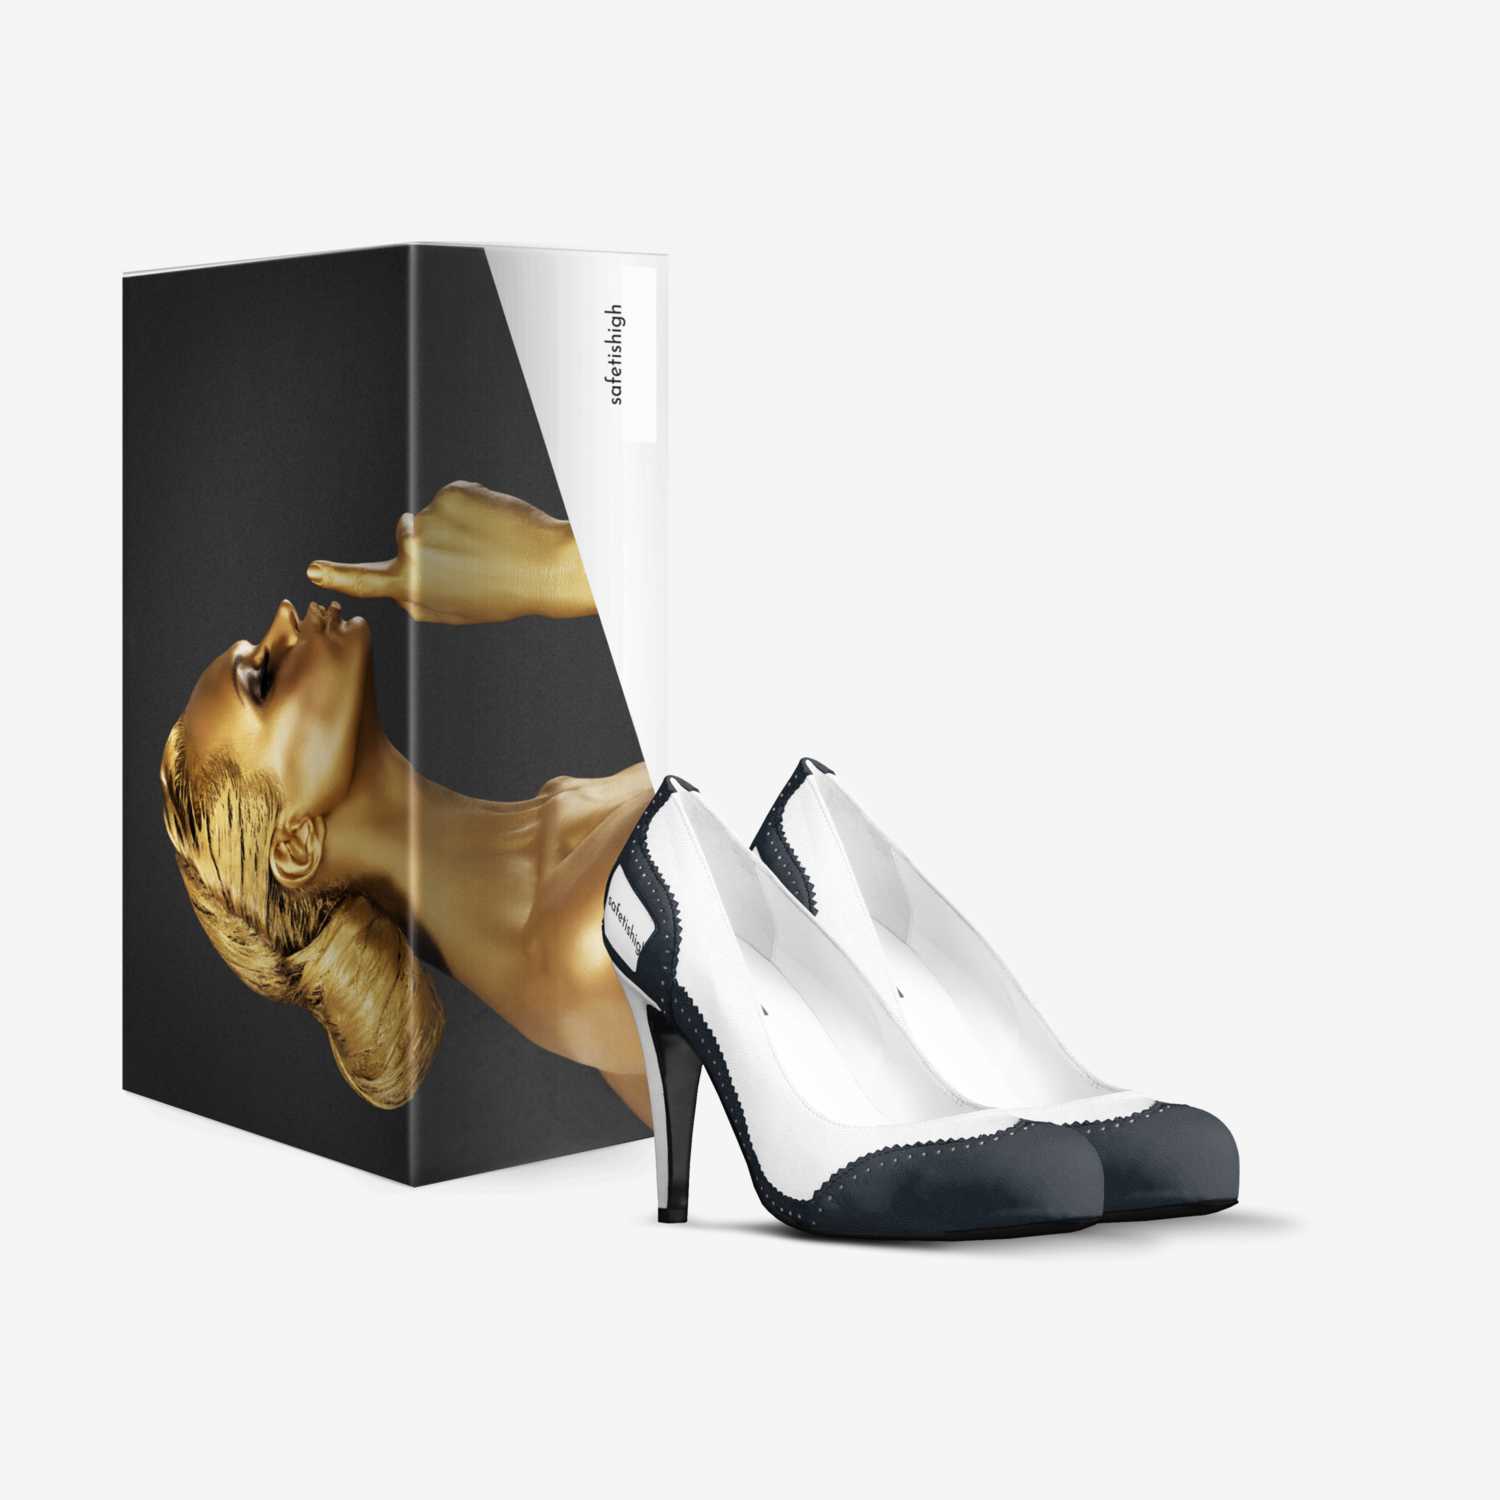 safetishigh custom made in Italy shoes by Kulawadee Ks | Box view